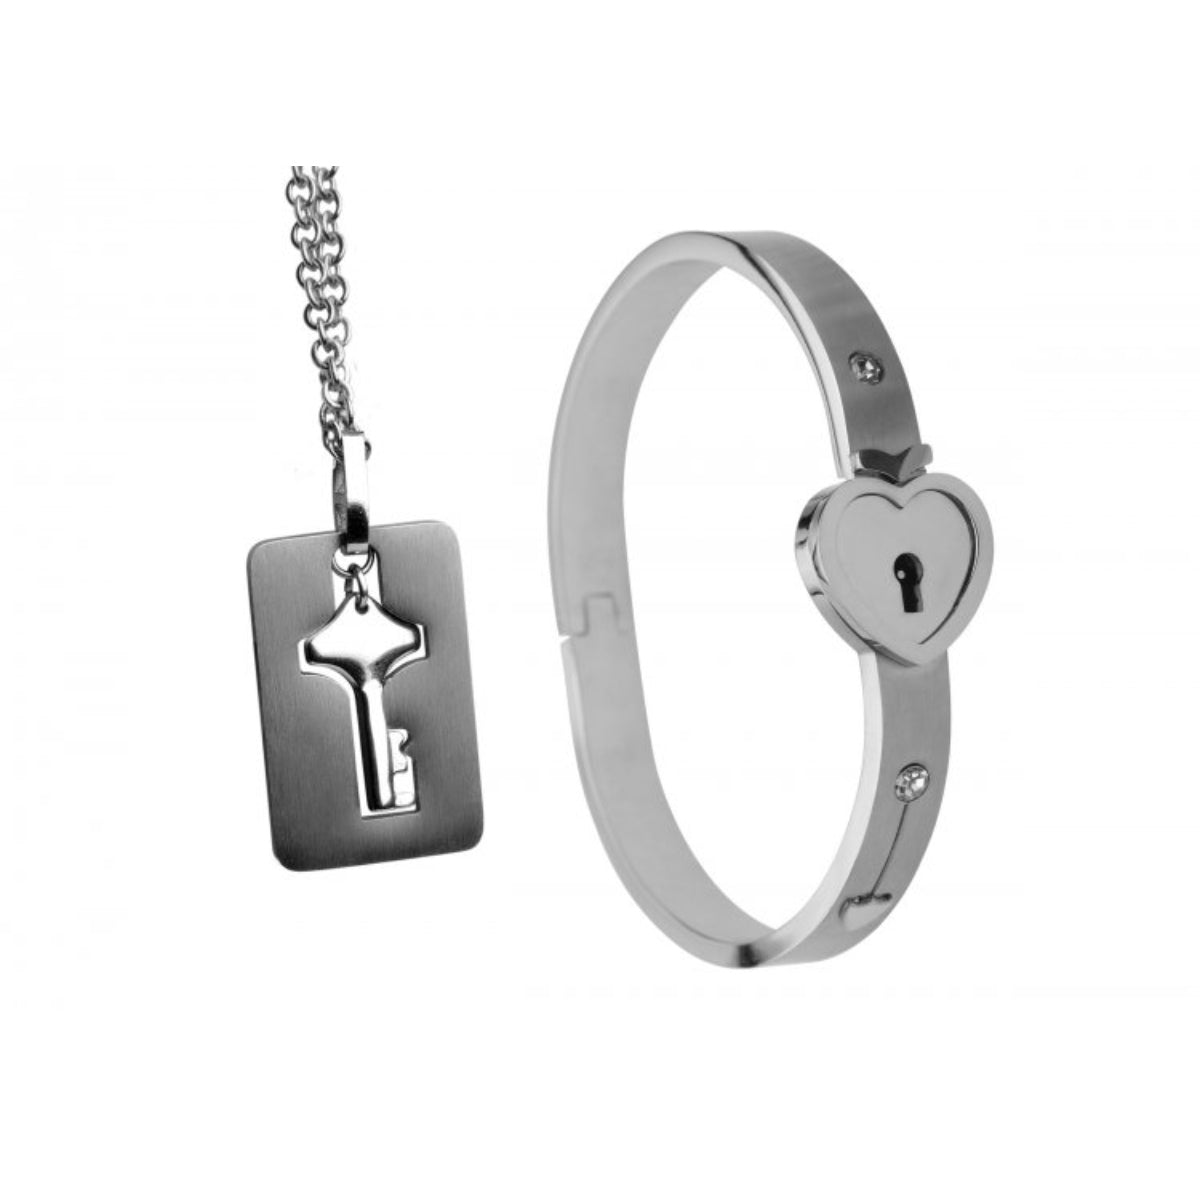 Master Series Cuffed Locking Bracelet & Key Necklace Silver